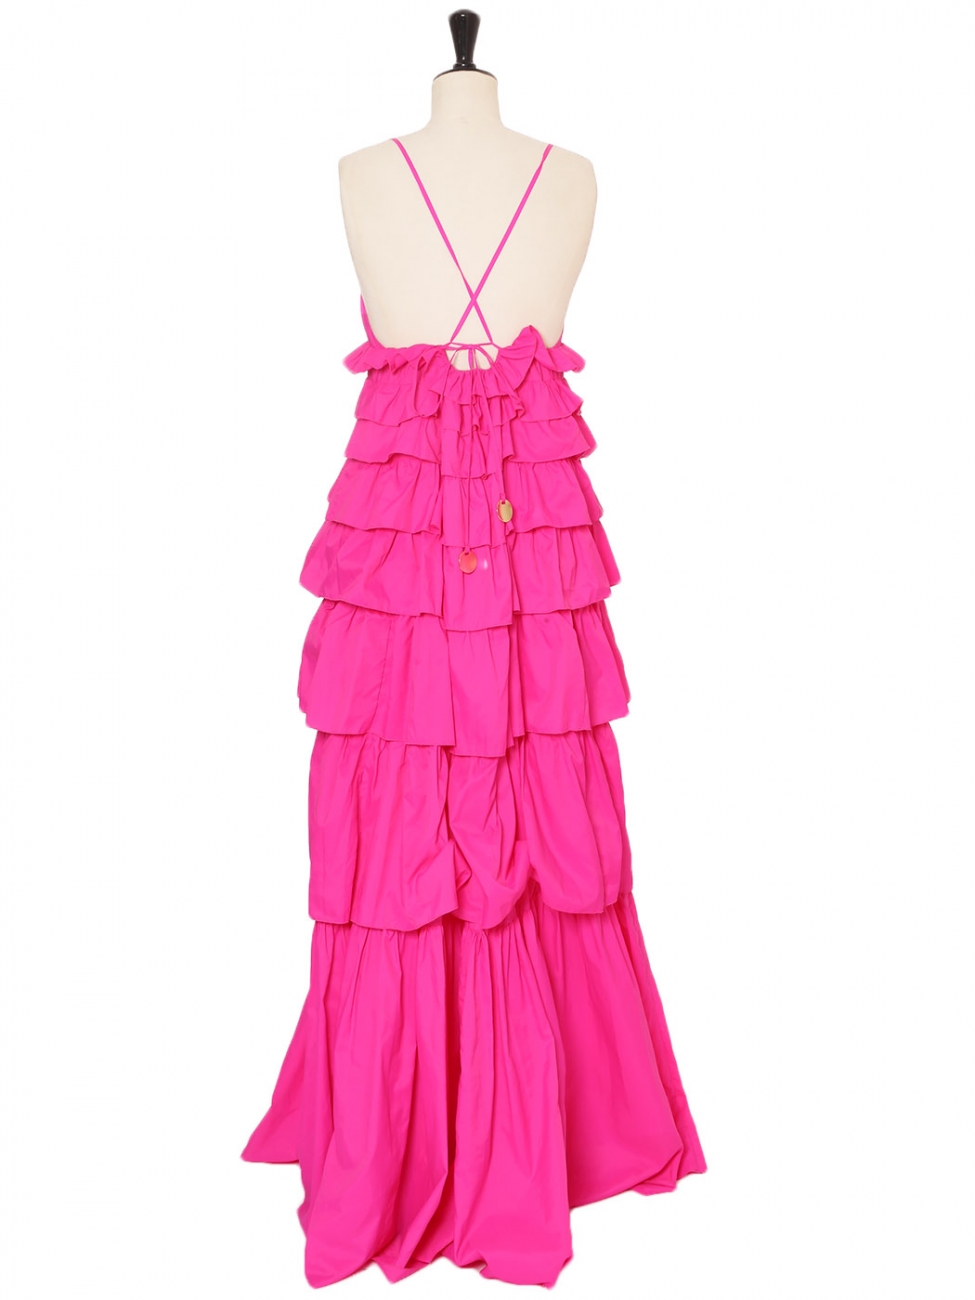 Robe rose fluo femme GRANDE TAILLE - Vêtements